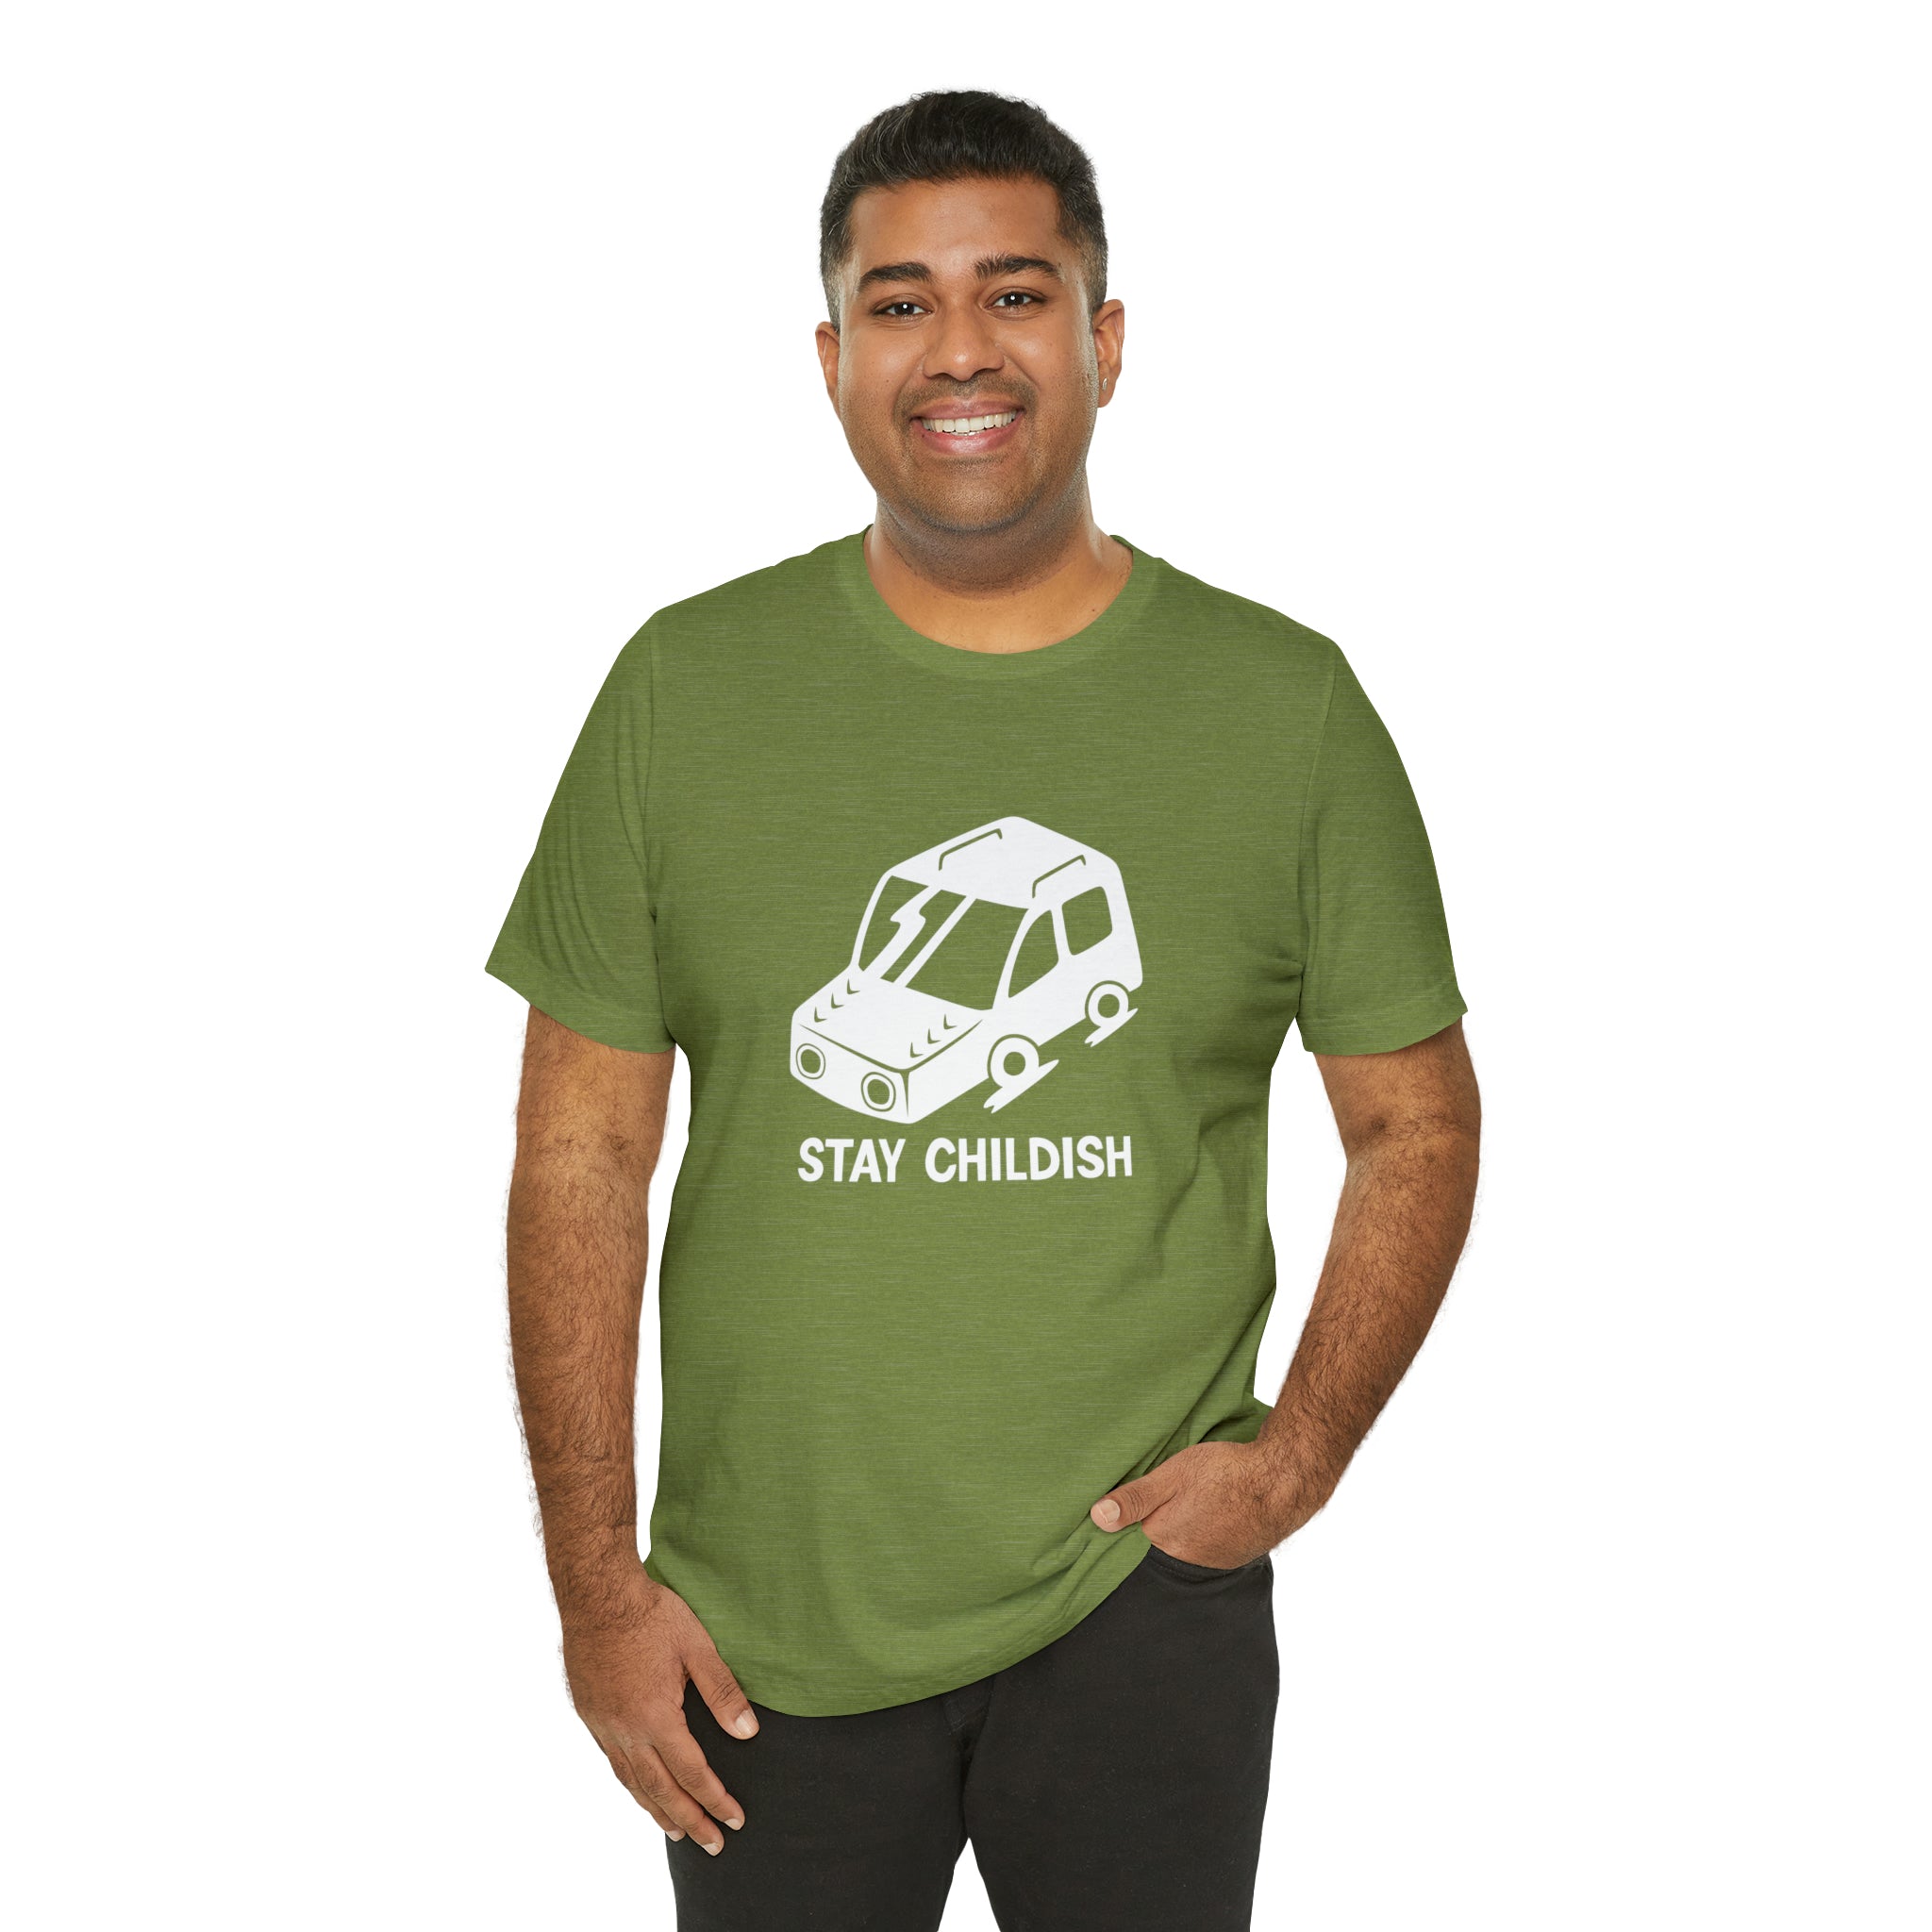 A man wearing a green Stay Childish T-Shirt.